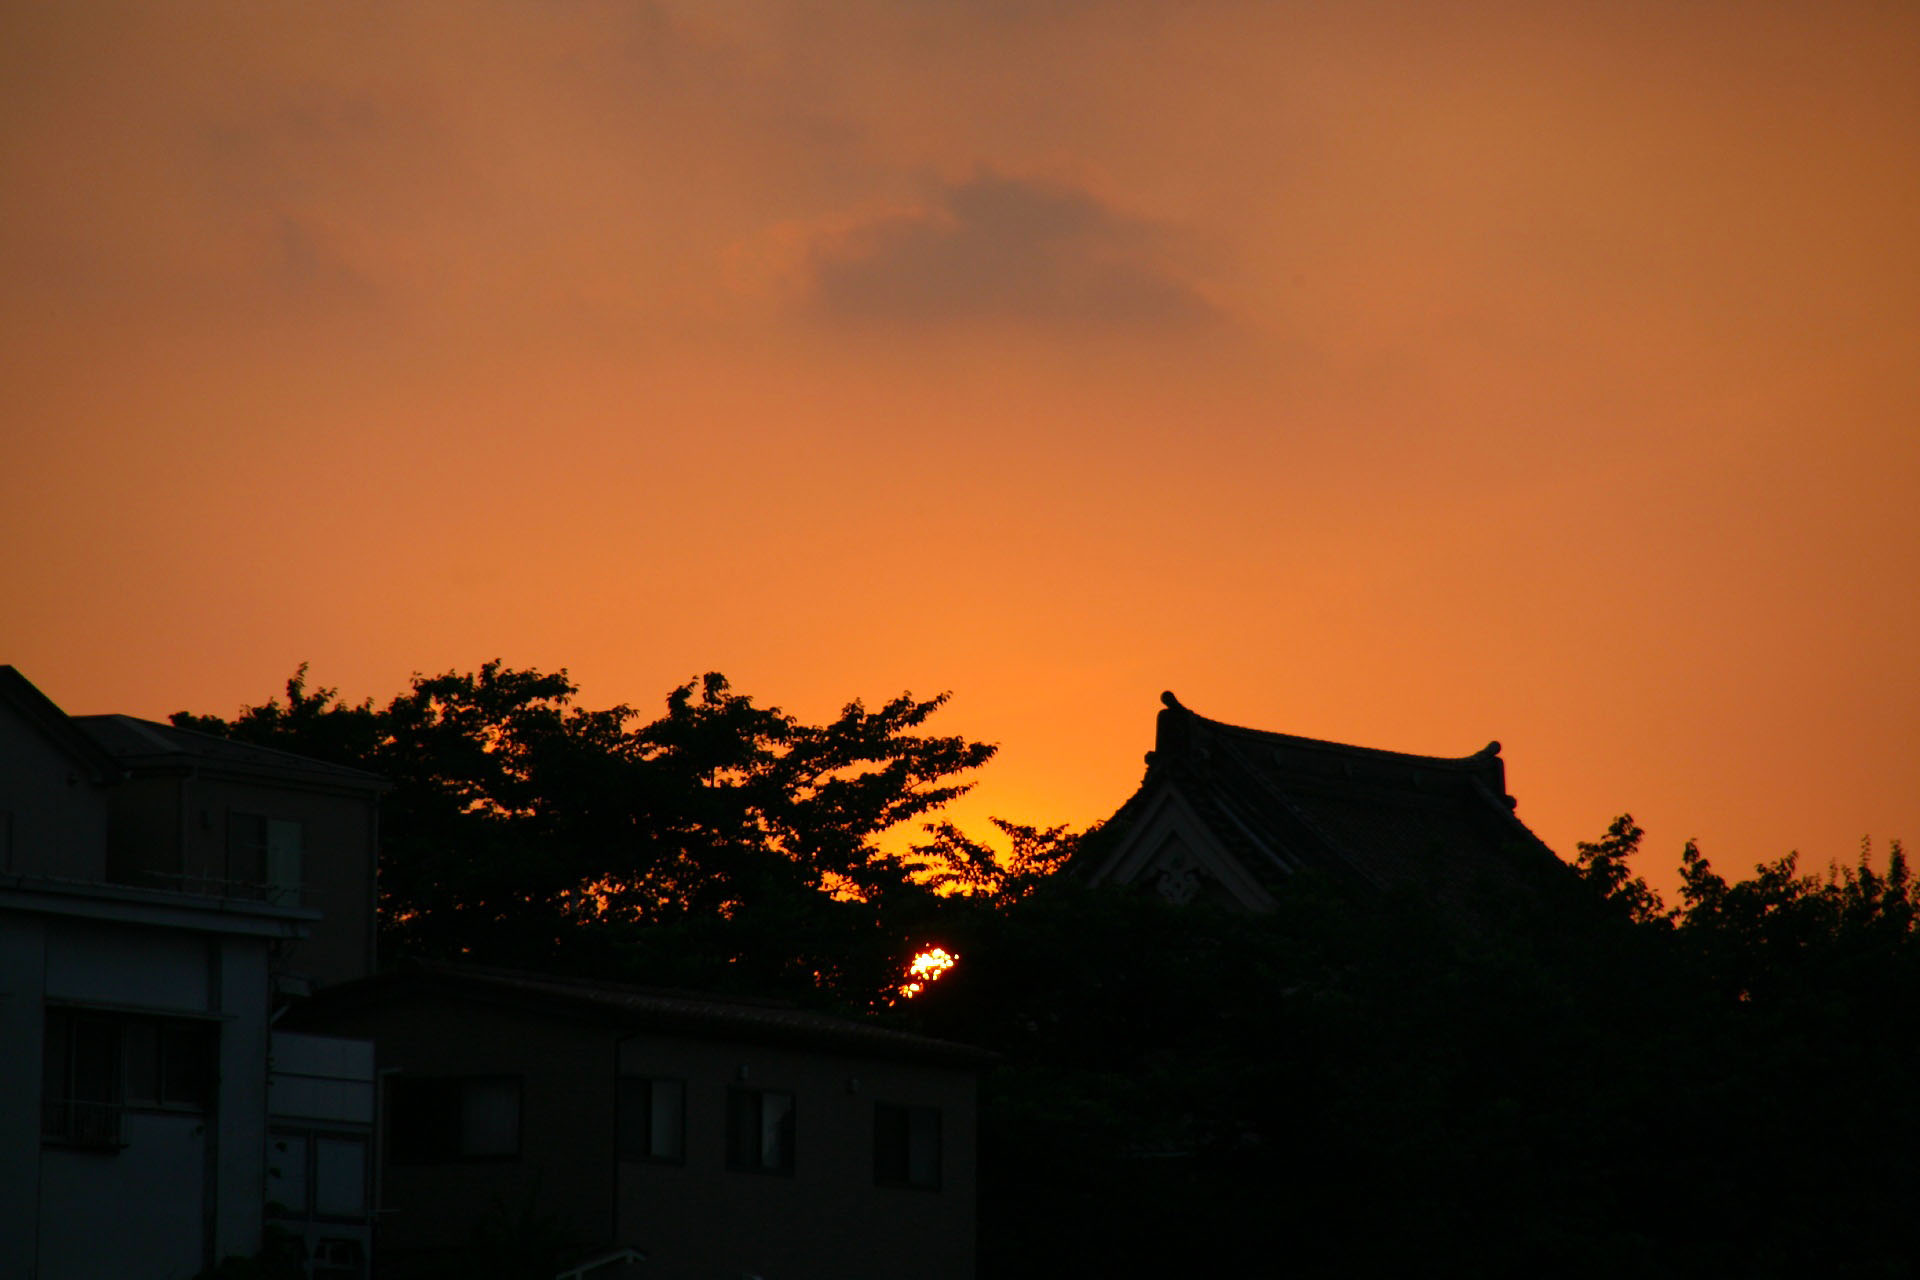 Sunset at Nippori station